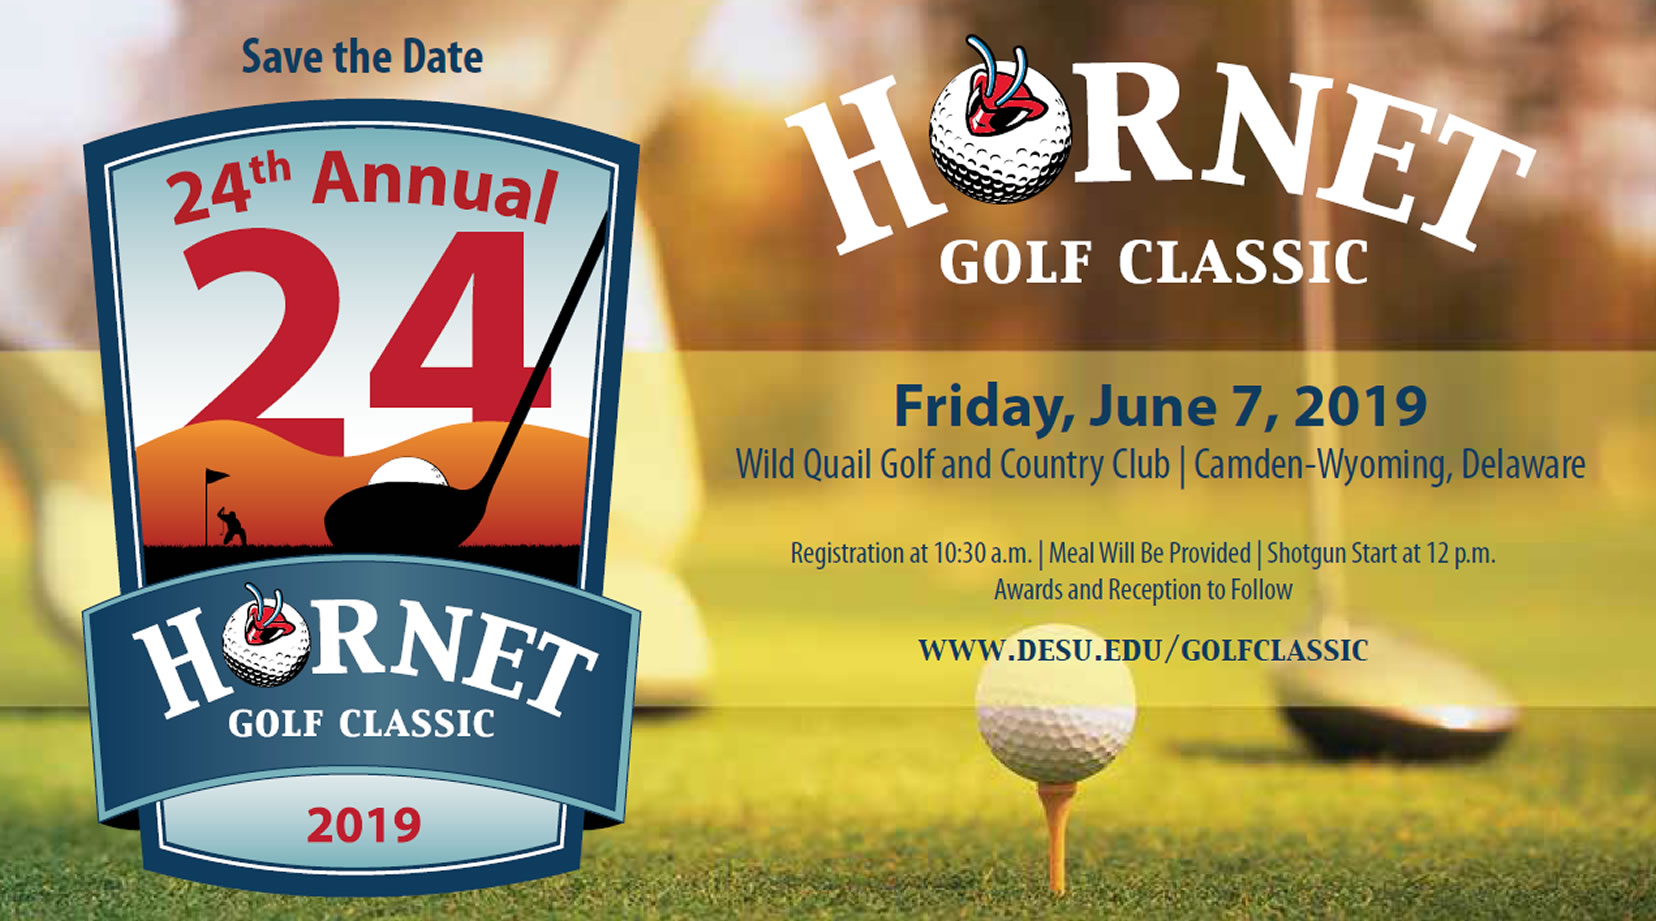 Hornet Golf Classic 2019